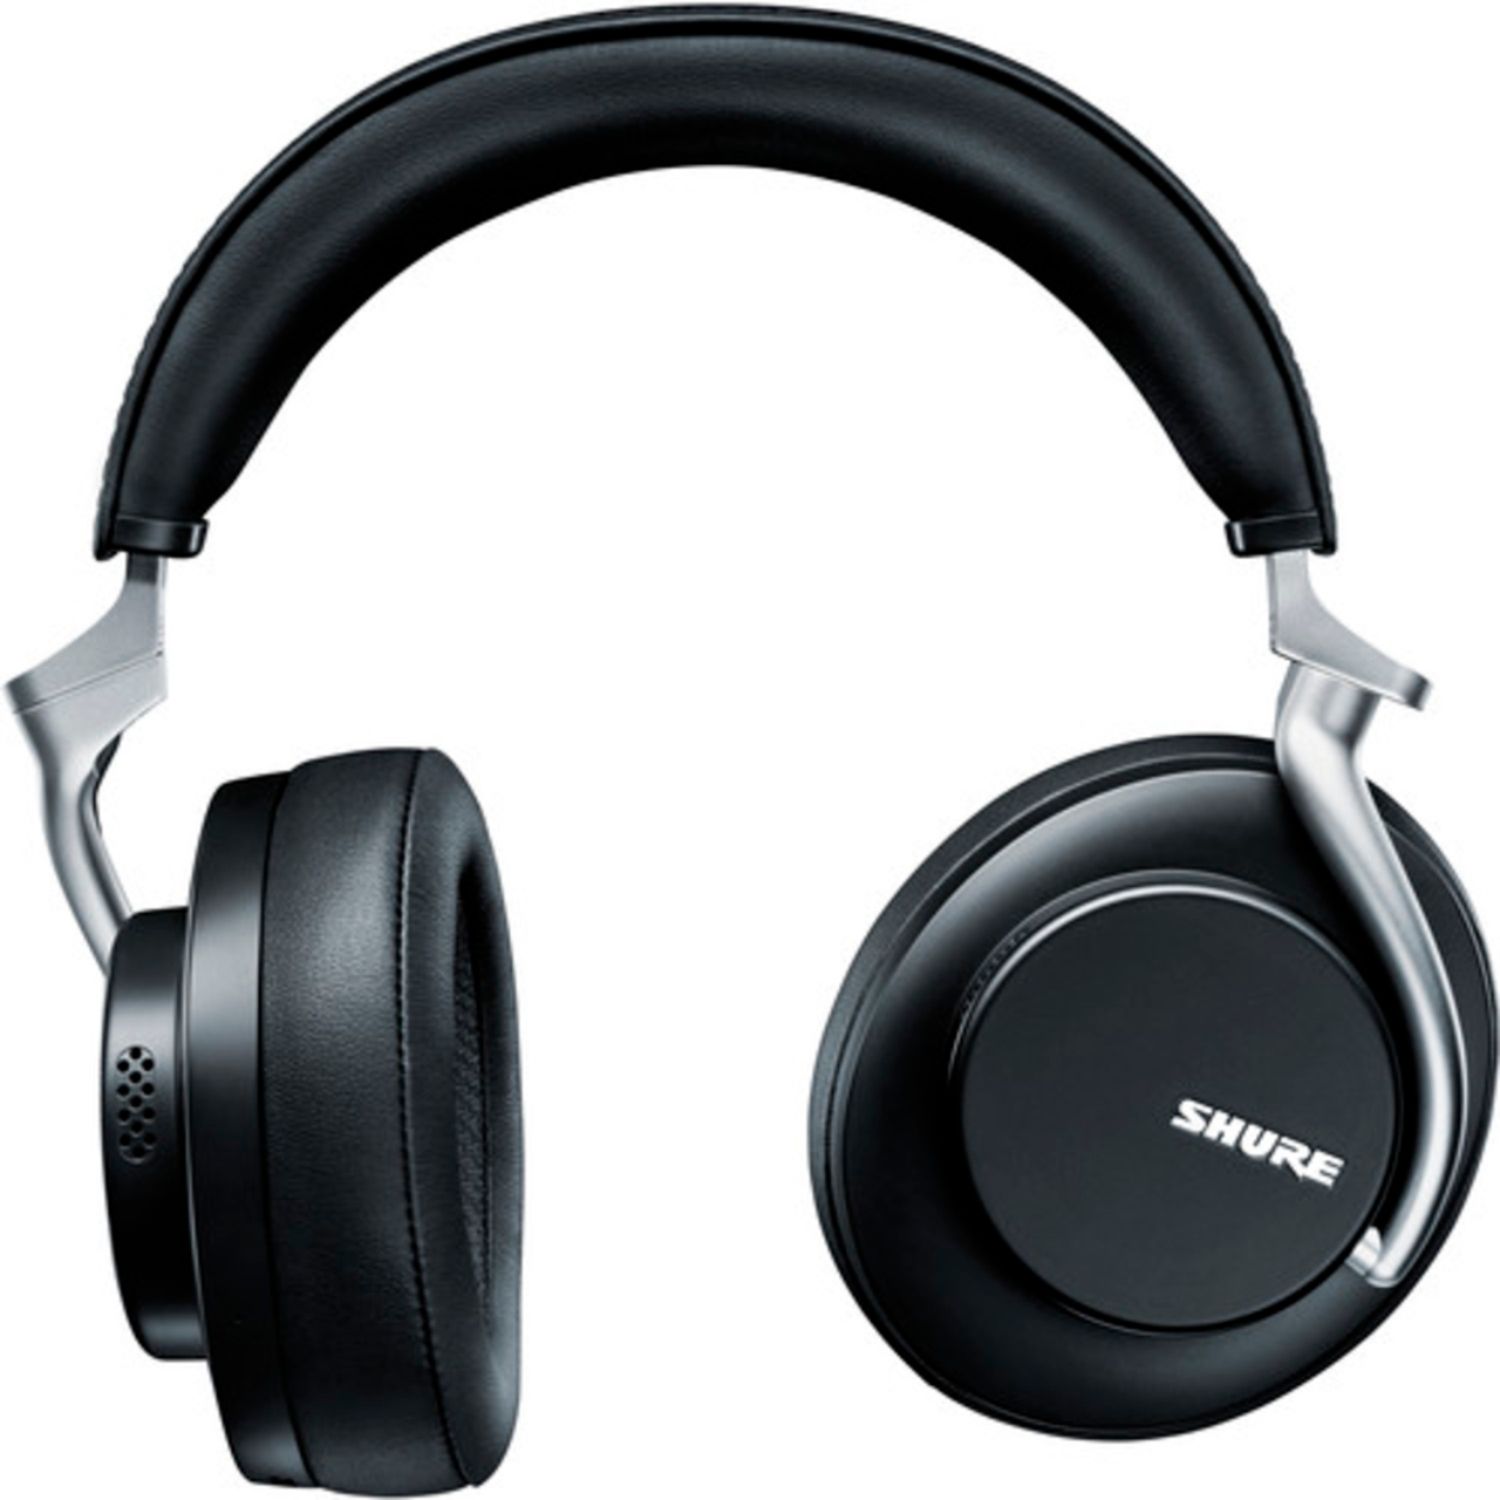 Angle View: nura - Nuraloop Wireless Noise Cancelling In-Ear Headphones - Black